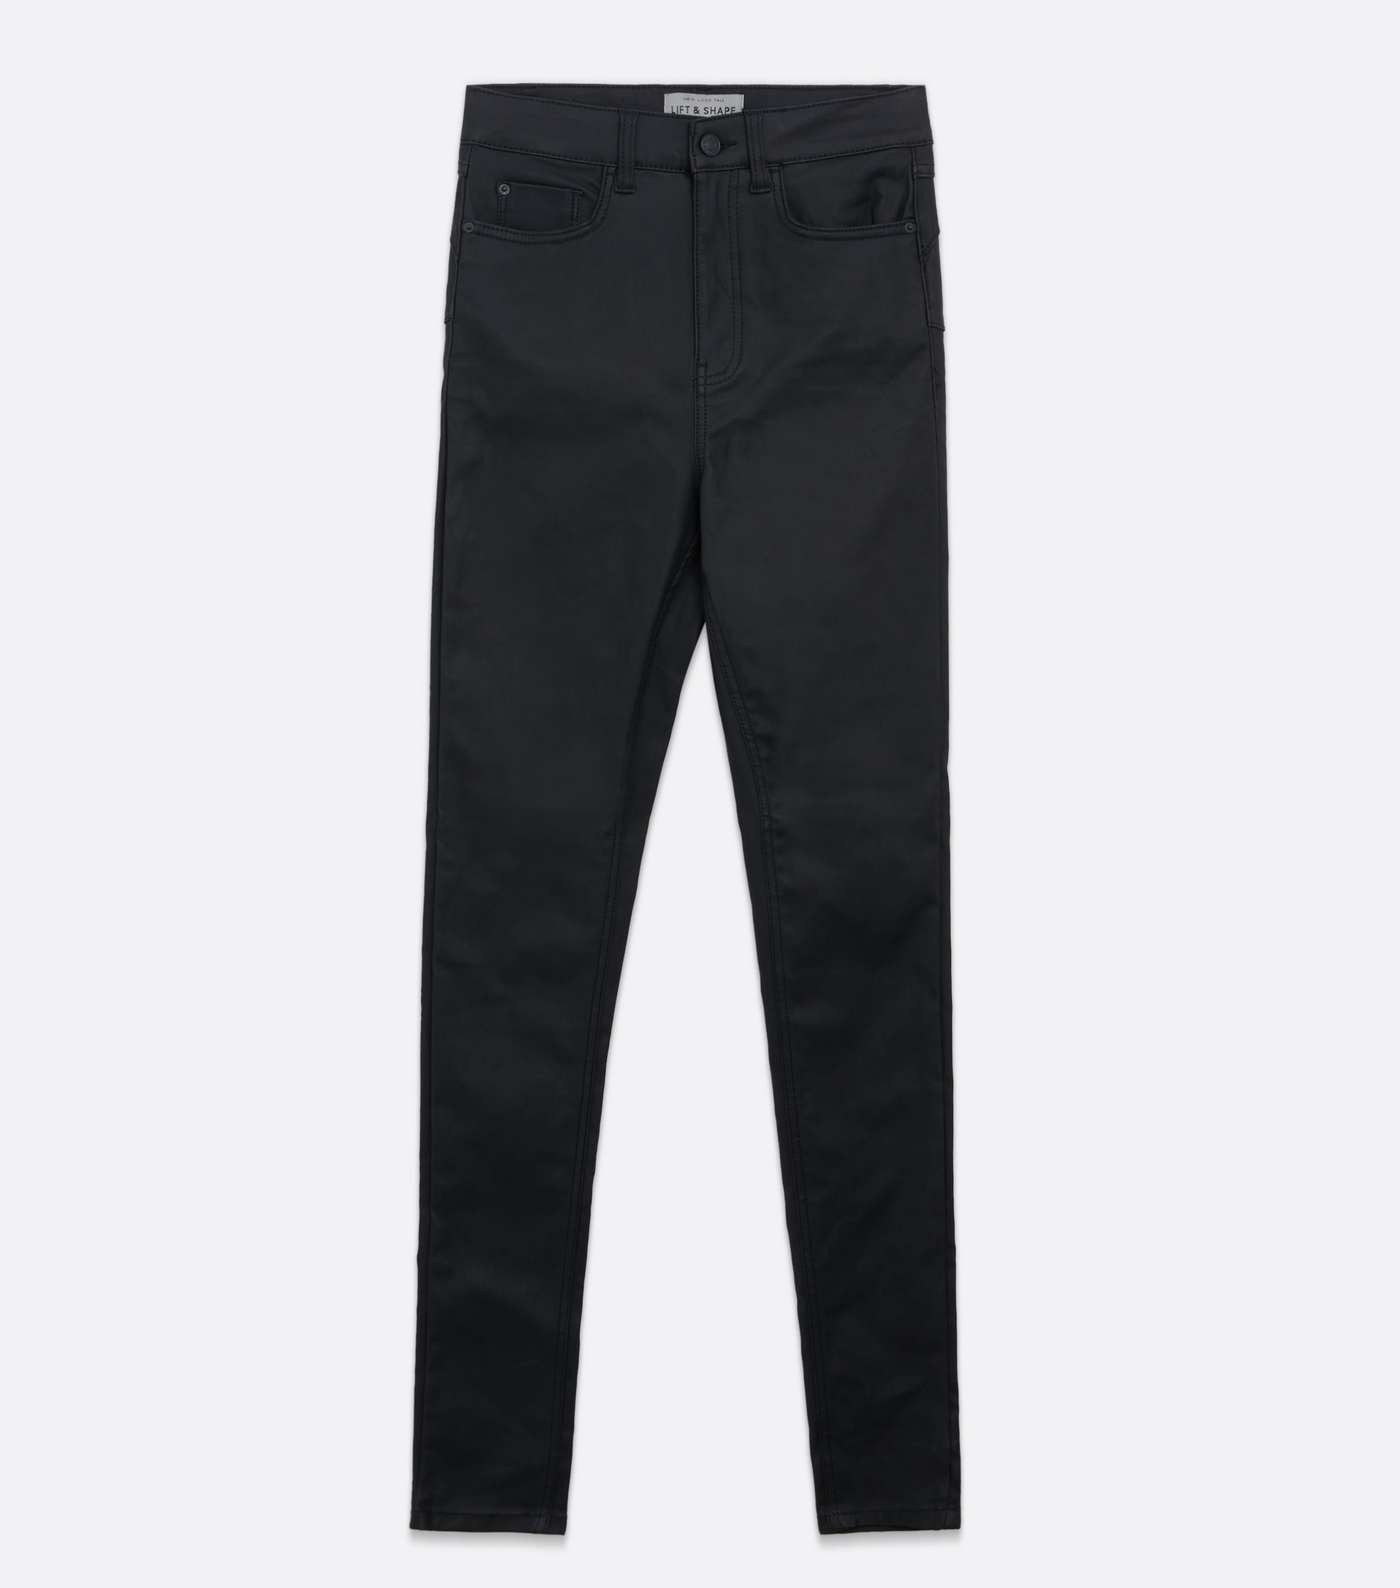 Tall Black Leather-Look Lift & Shape Jenna Skinny Jeans Image 5